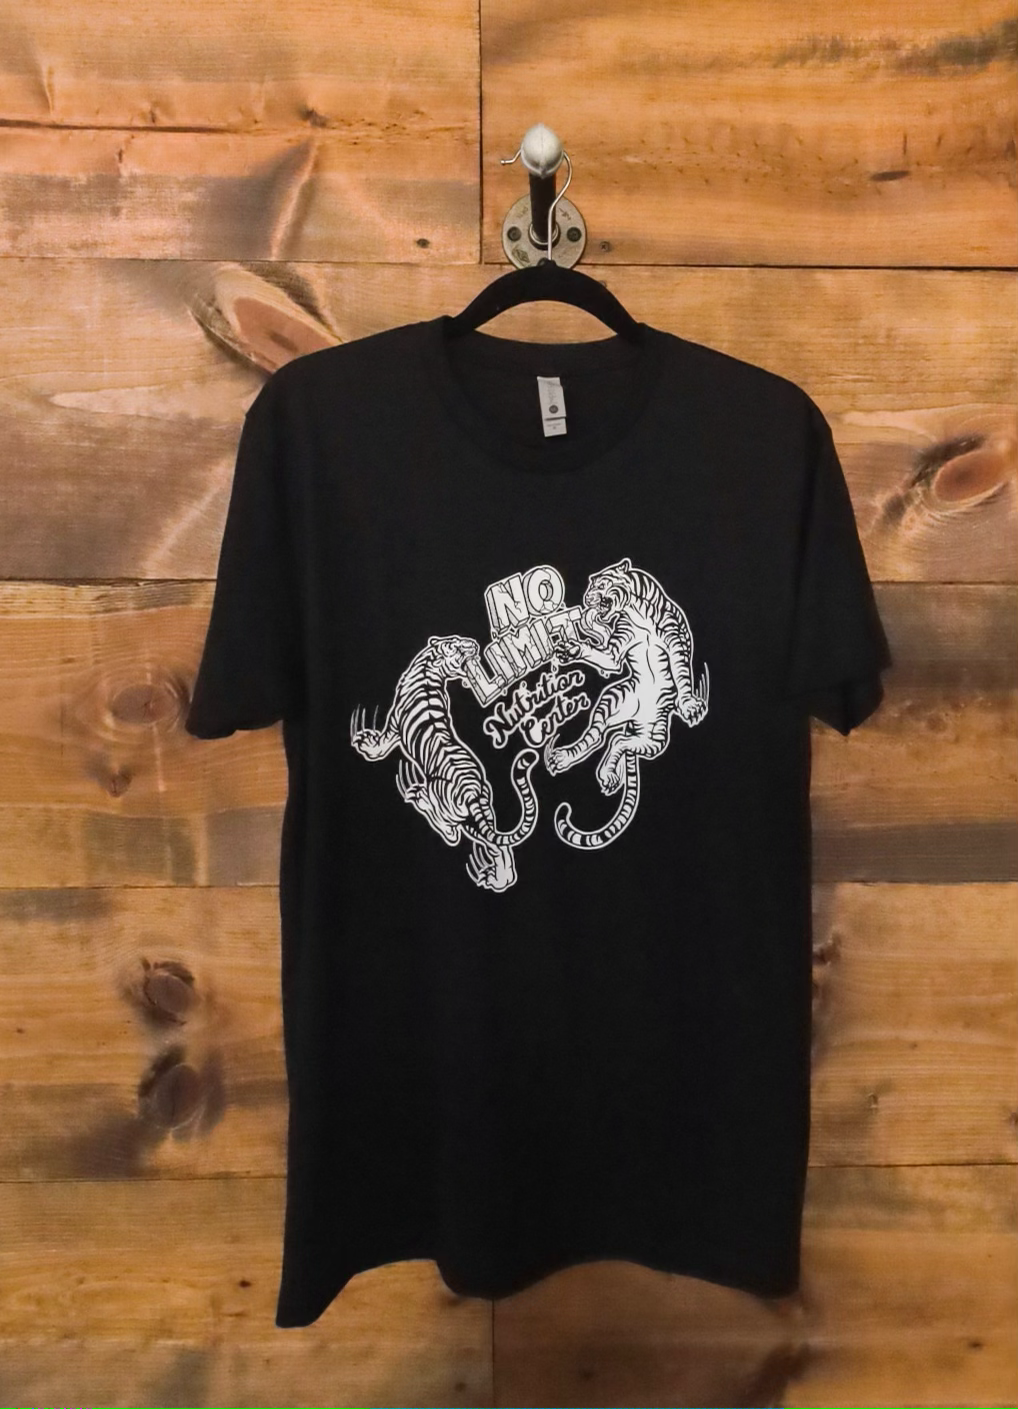 Two Tigers Shirt Black